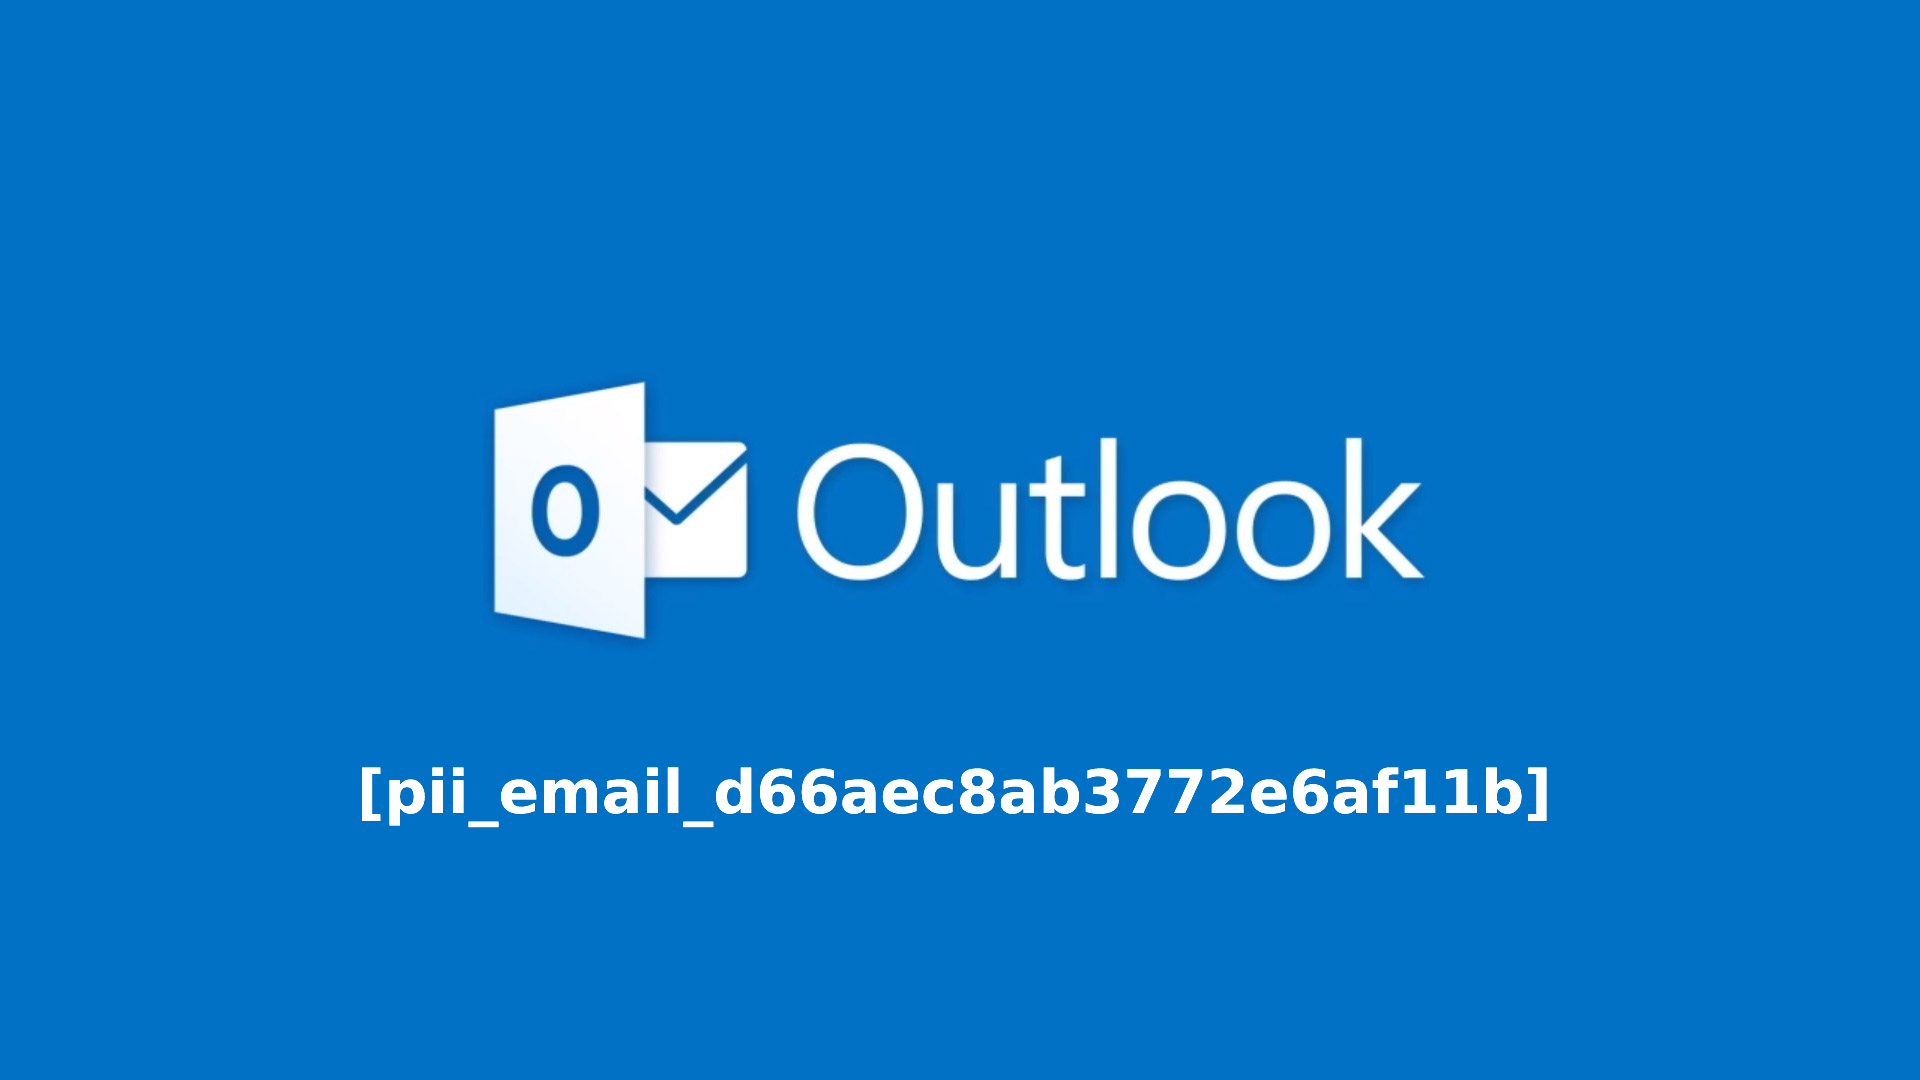 Fix Outlook Error [pii_email_d66aec8ab3772e6af11b] in 2 Min